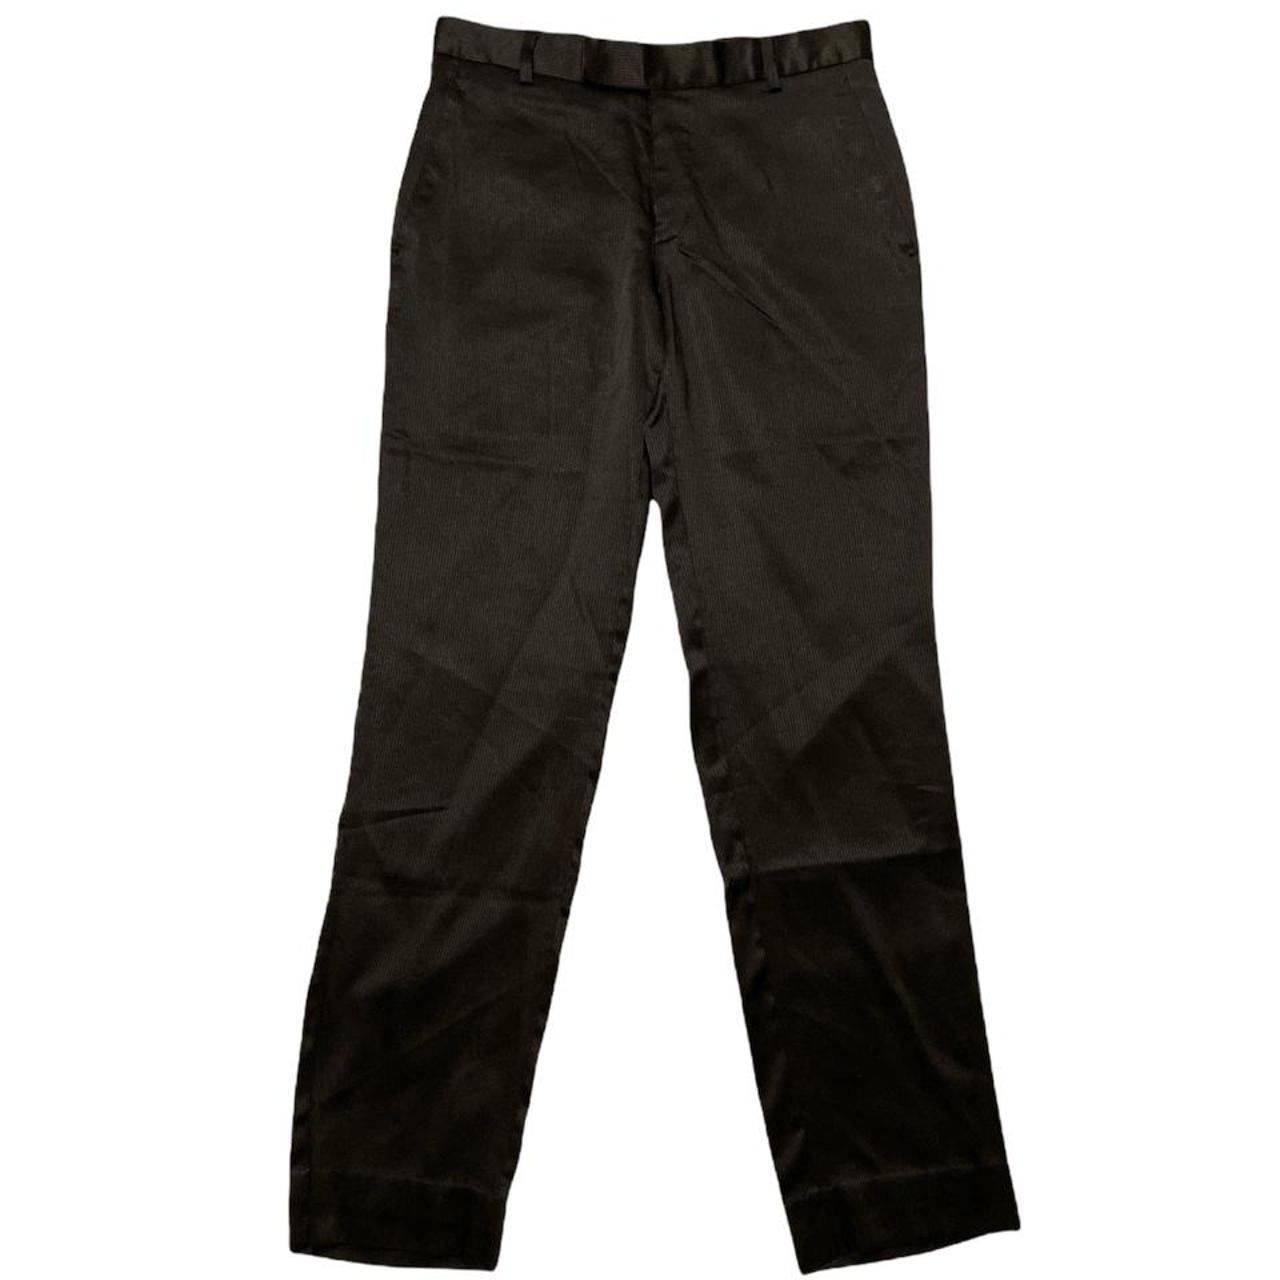 Black Metallic #Pinstripe Pants Brand: The Raymond... - Depop